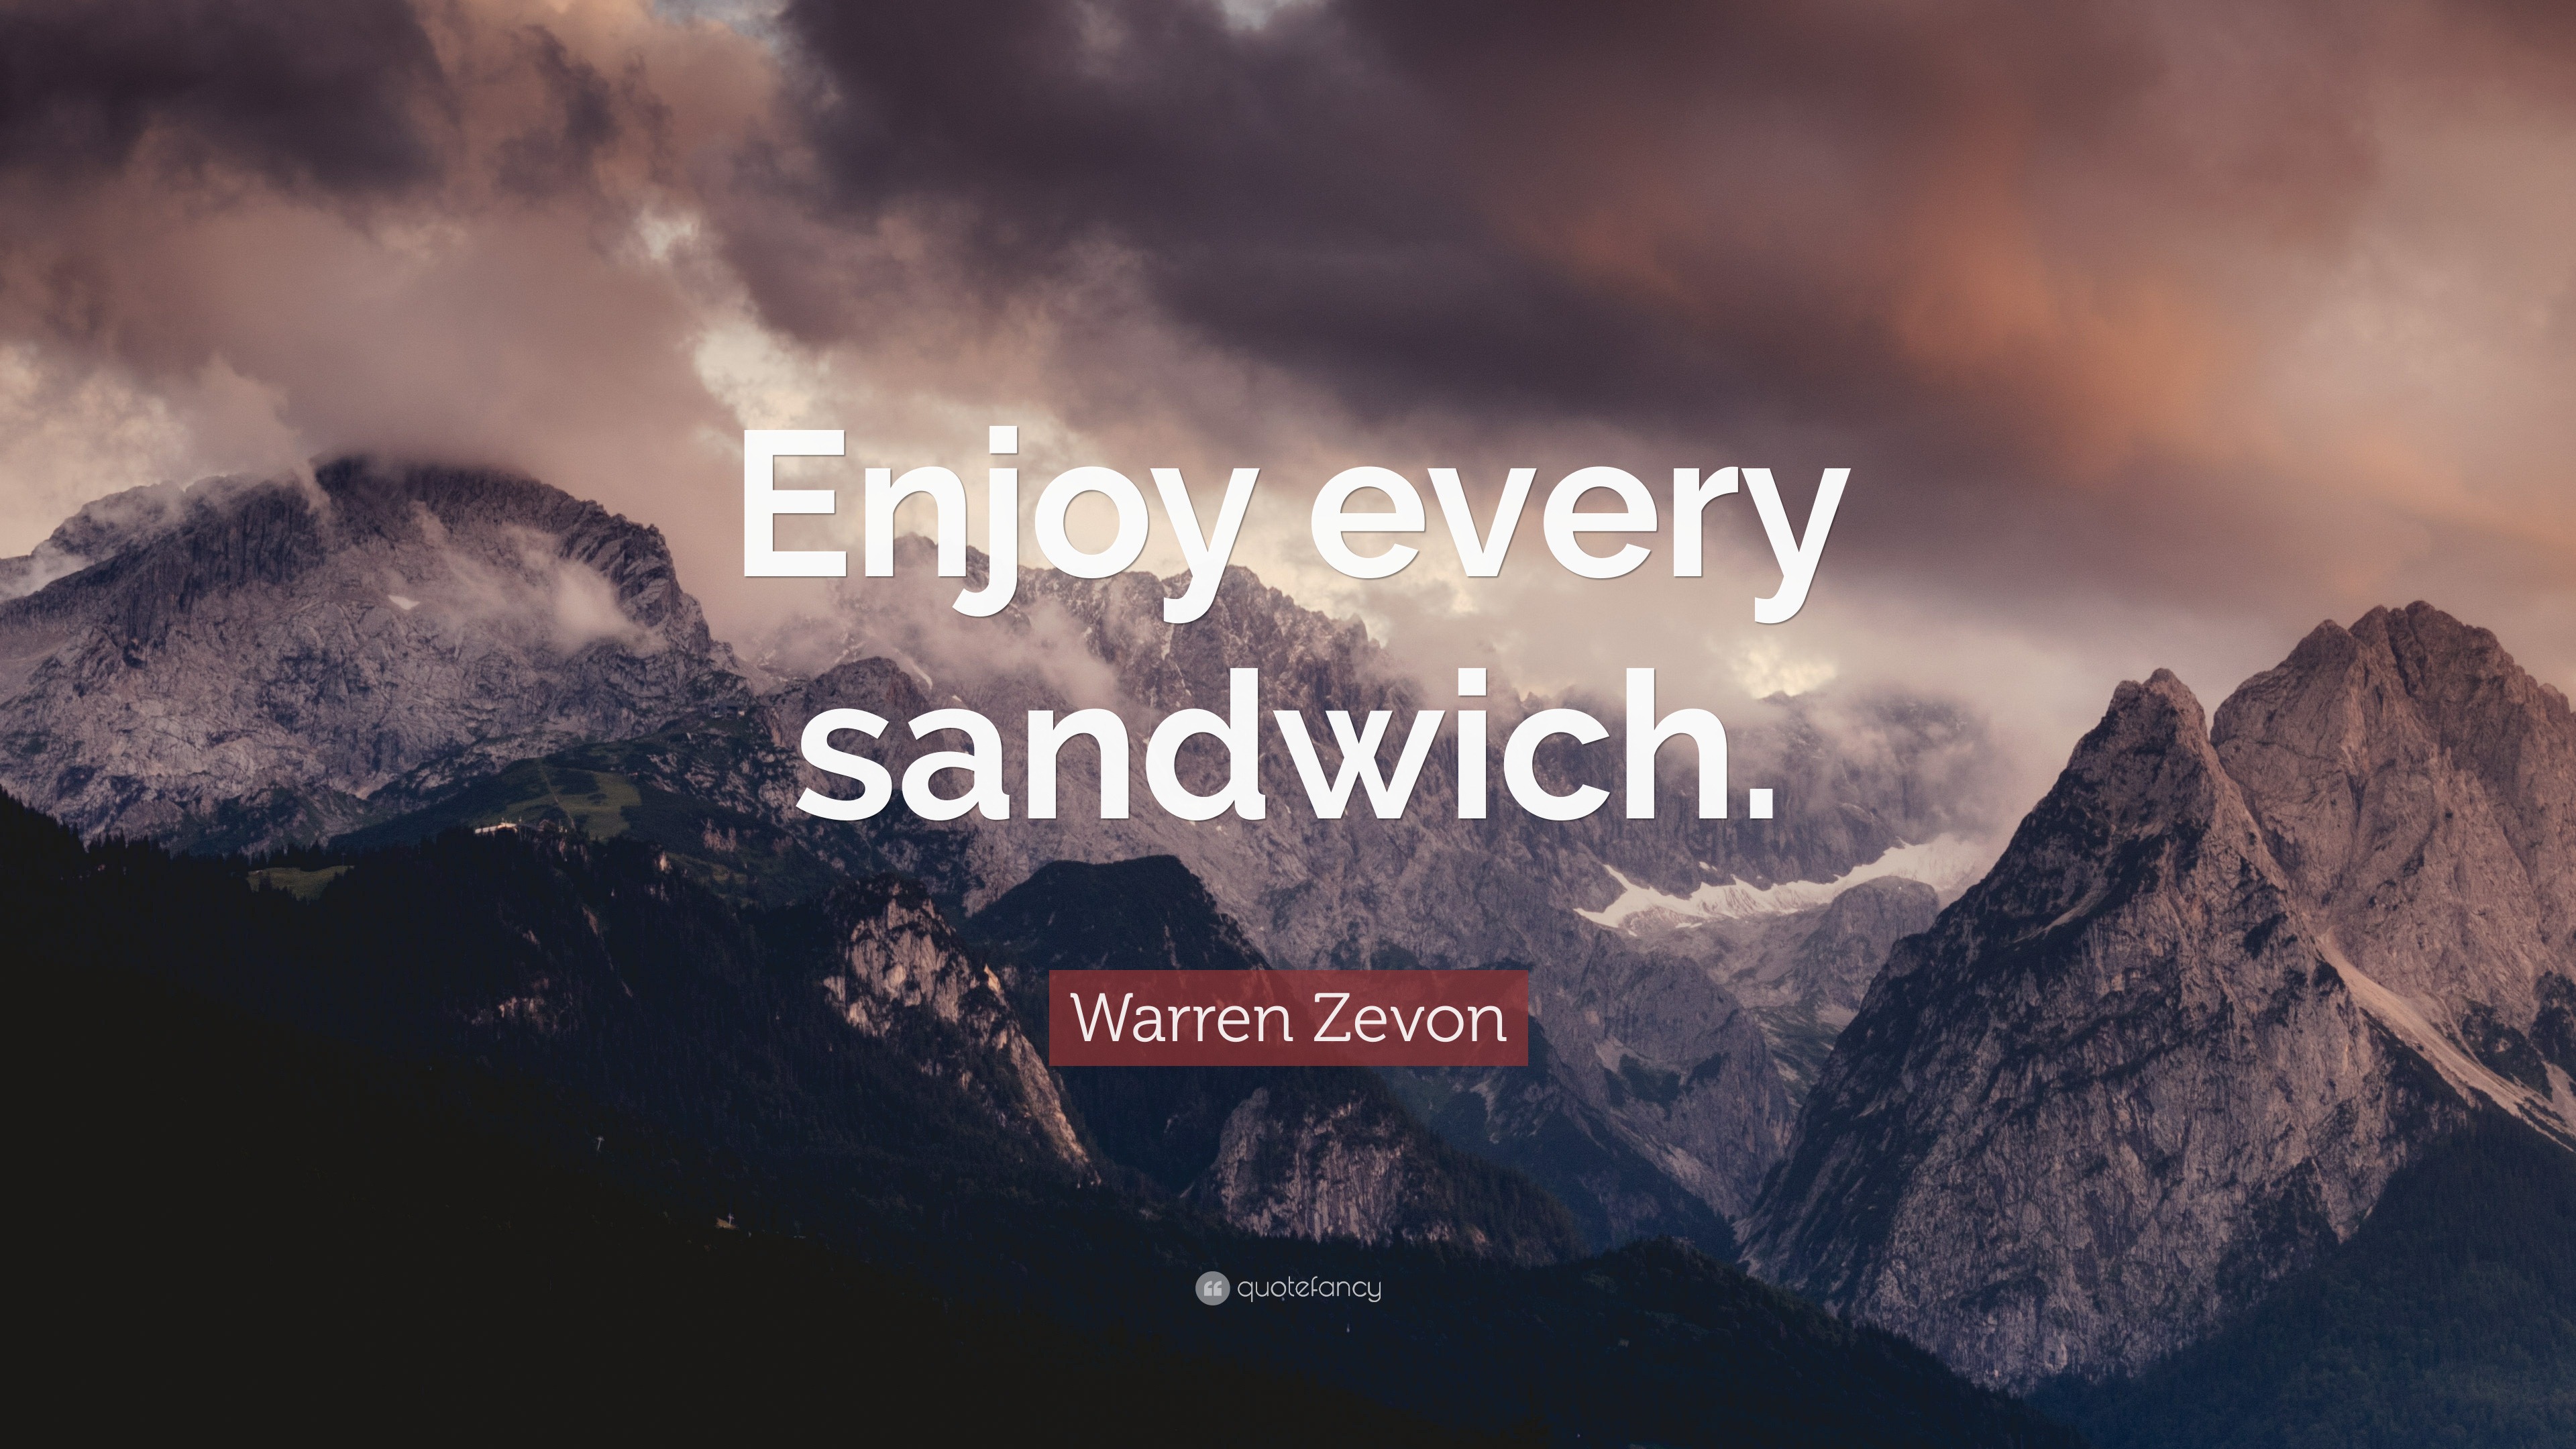 keep calm and enjoy every sandwich